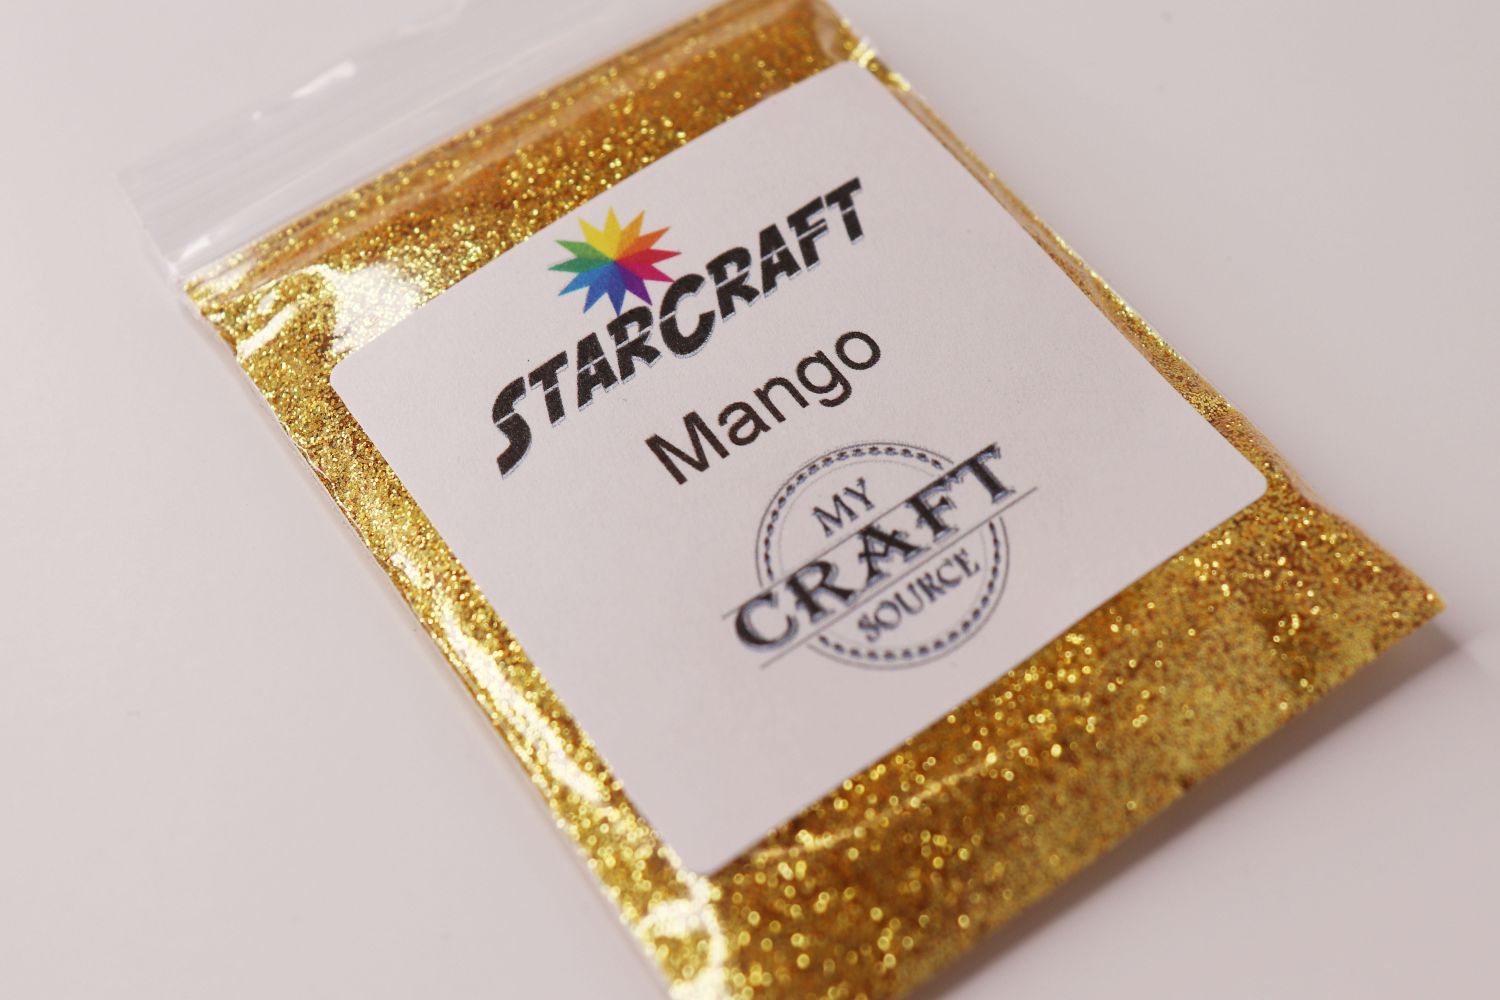 StarCraft Metallic Glitter - Mango - 0.5 oz